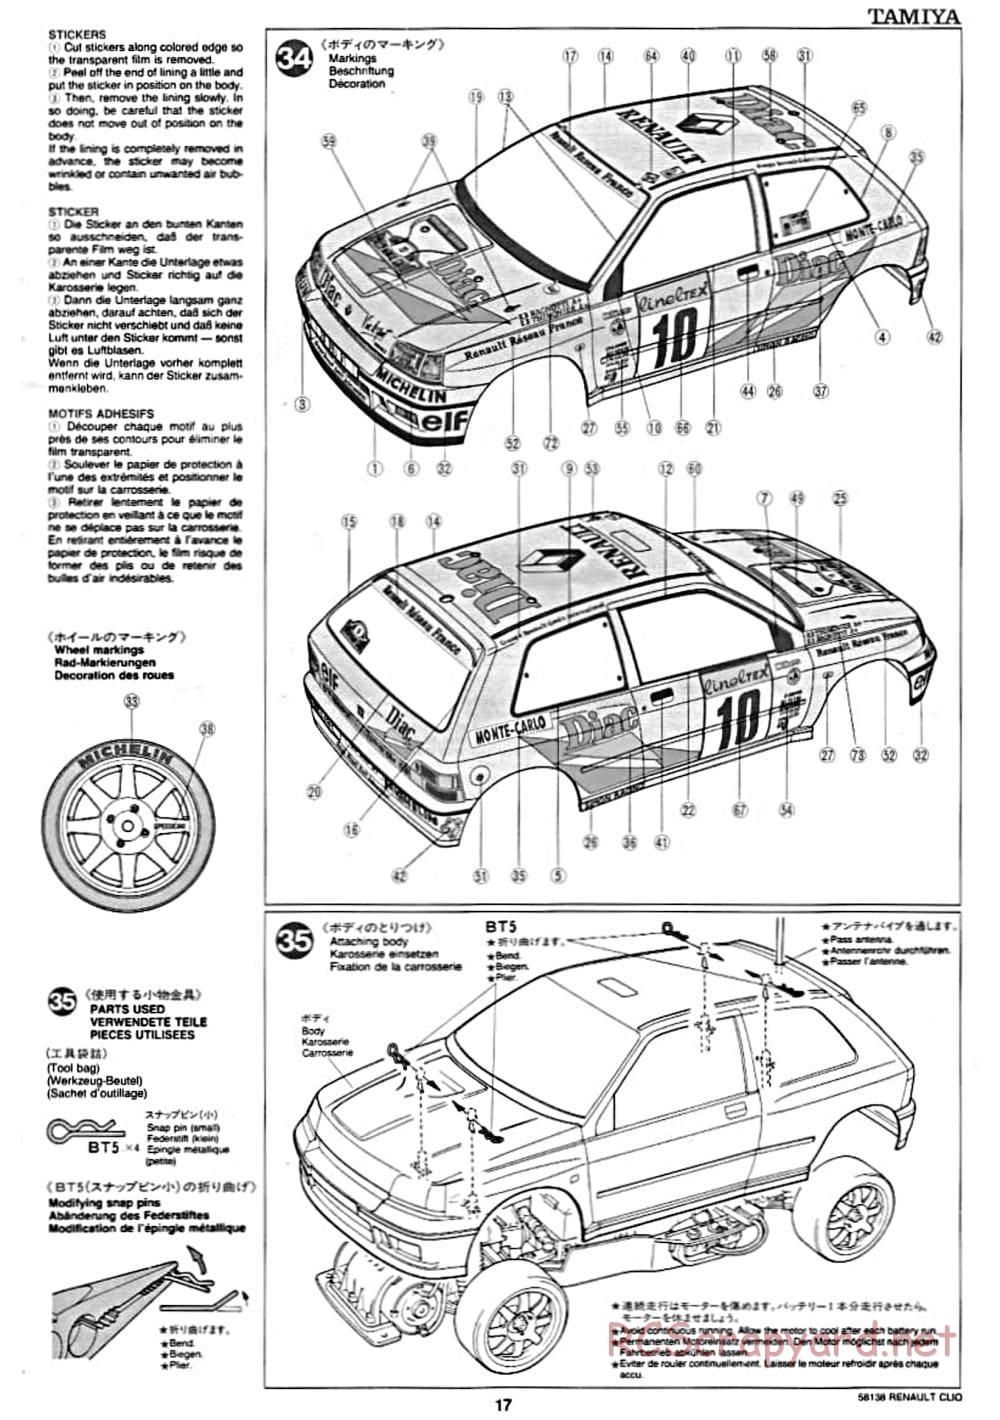 Tamiya - Renault Clio Williams Chassis - Manual - Page 18